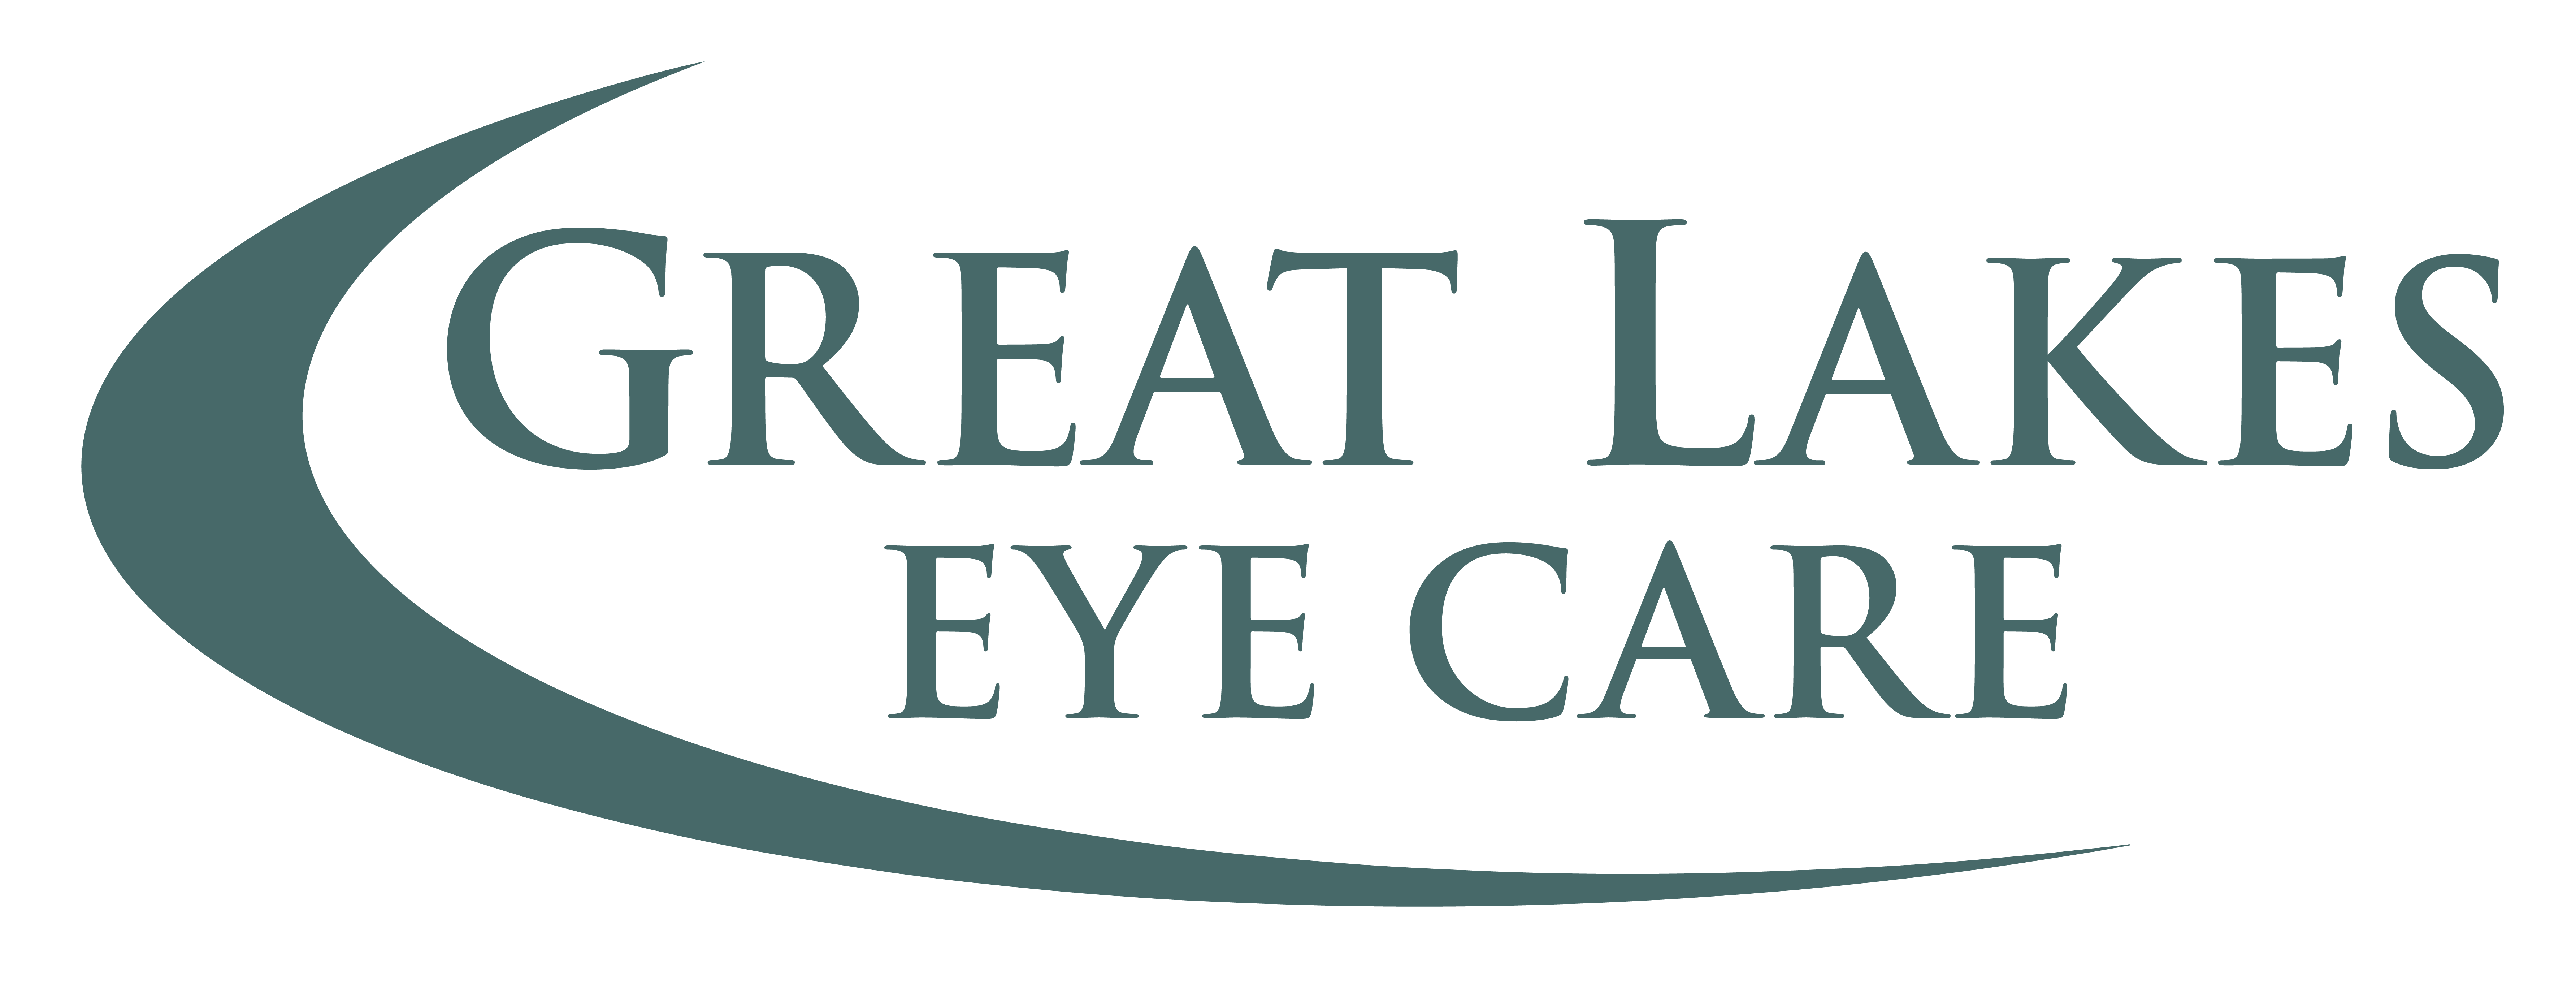 Great lakes eye care